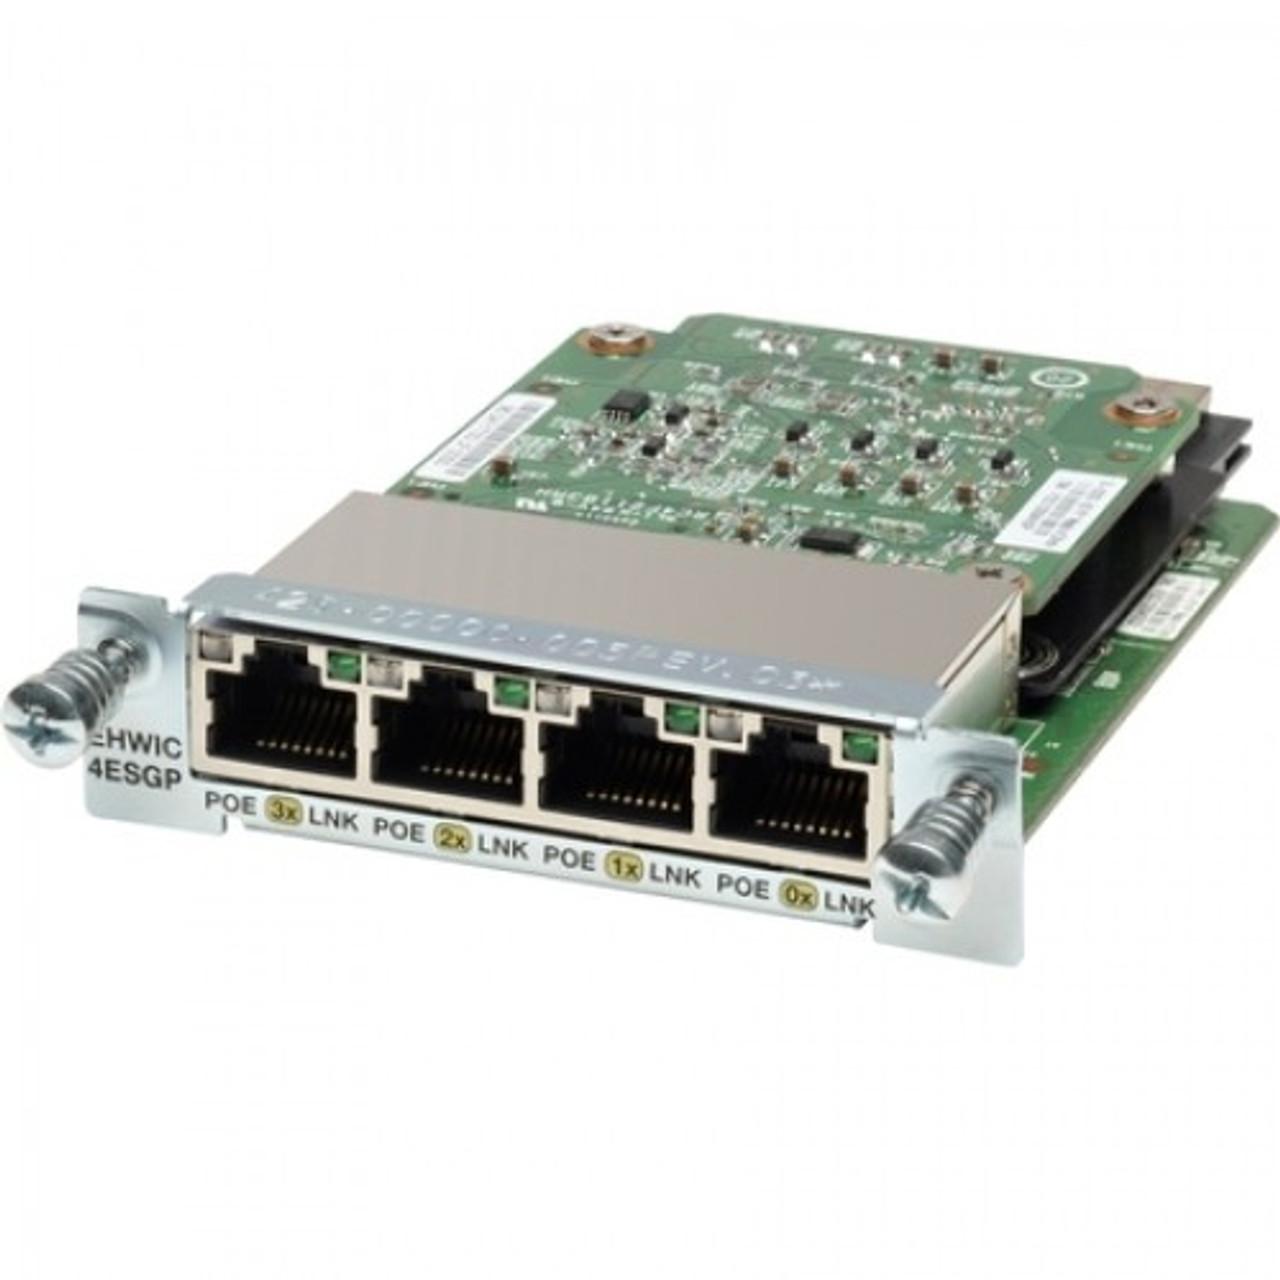 Cisco EHWIC-4ESG Internal Ethernet 1000Mbit/s networking card